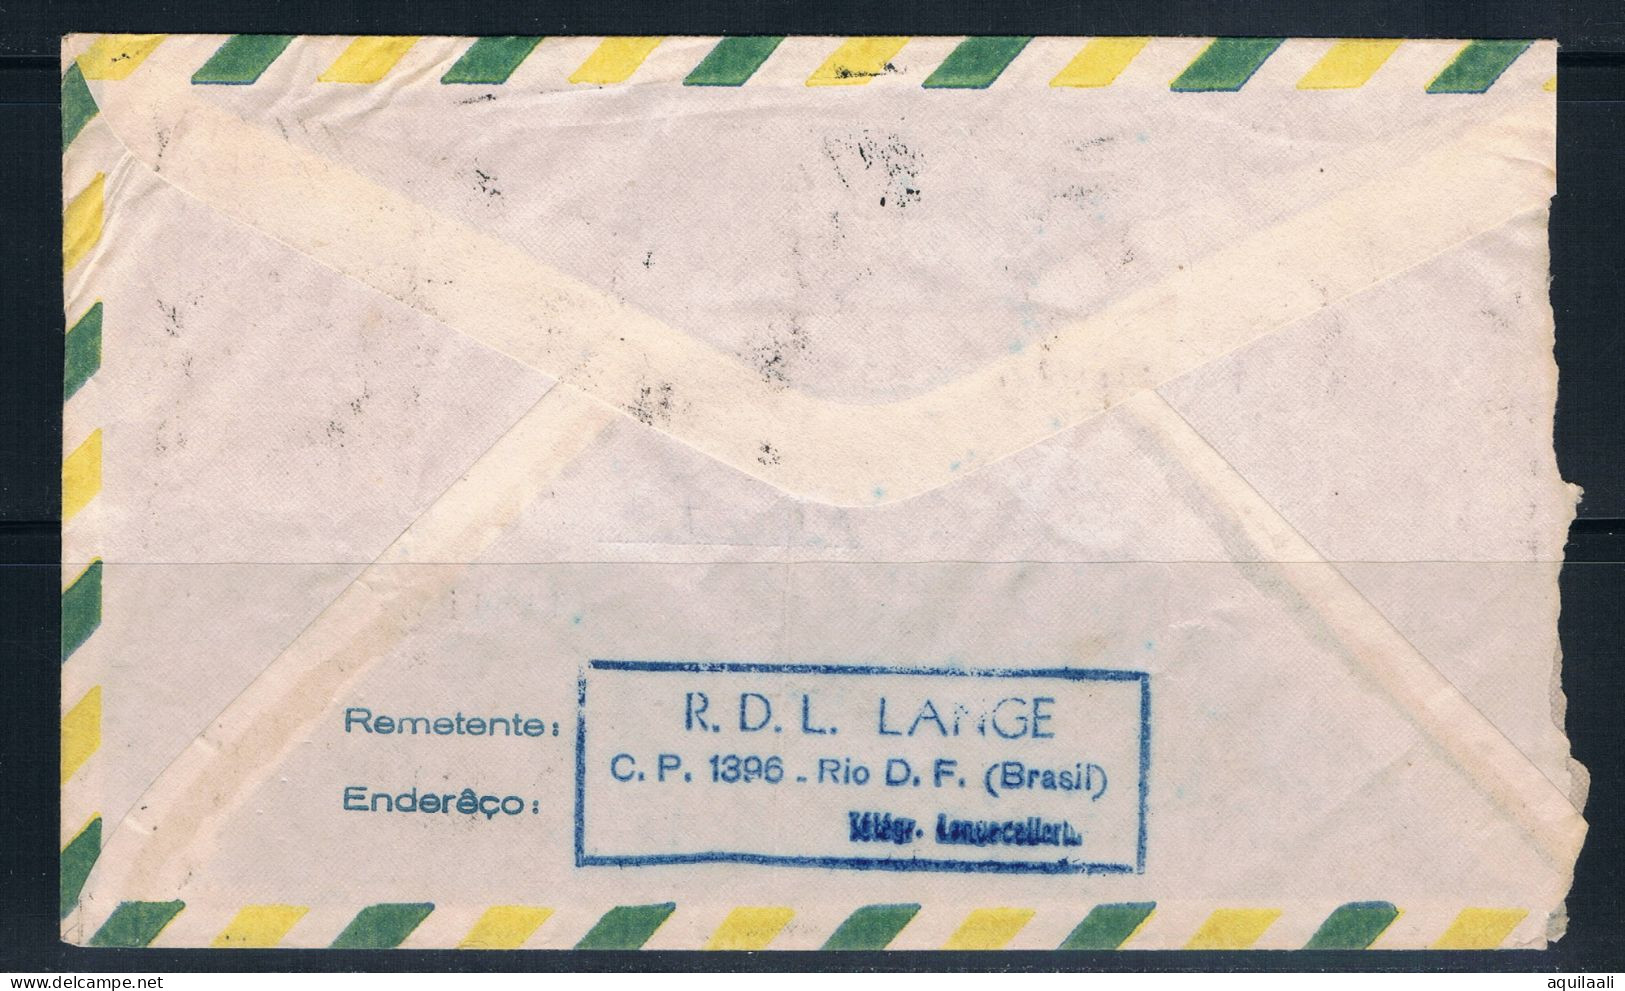 Storia Postale Brasile1966. Lettera Per Aosta, Italia. - Briefe U. Dokumente